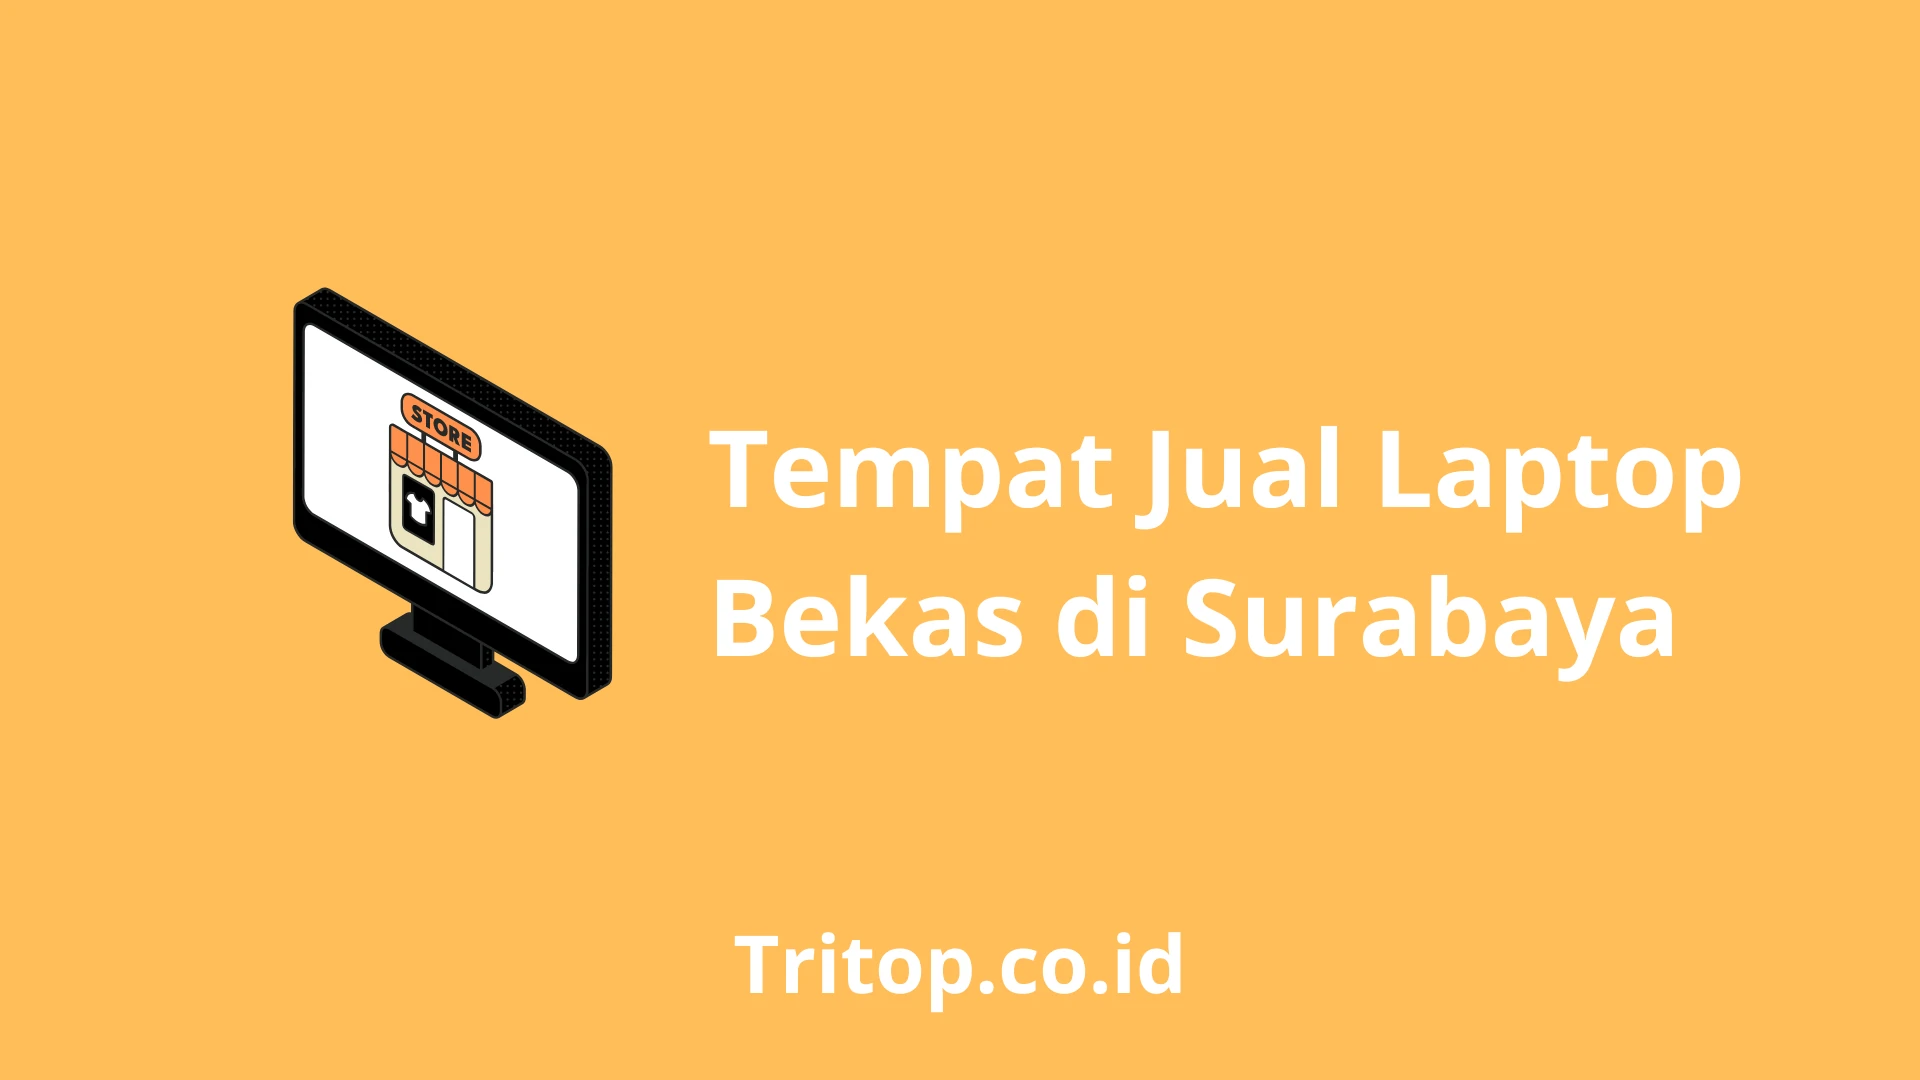 Tempat Jual Laptop Bekas di Surabaya tritop.co.id